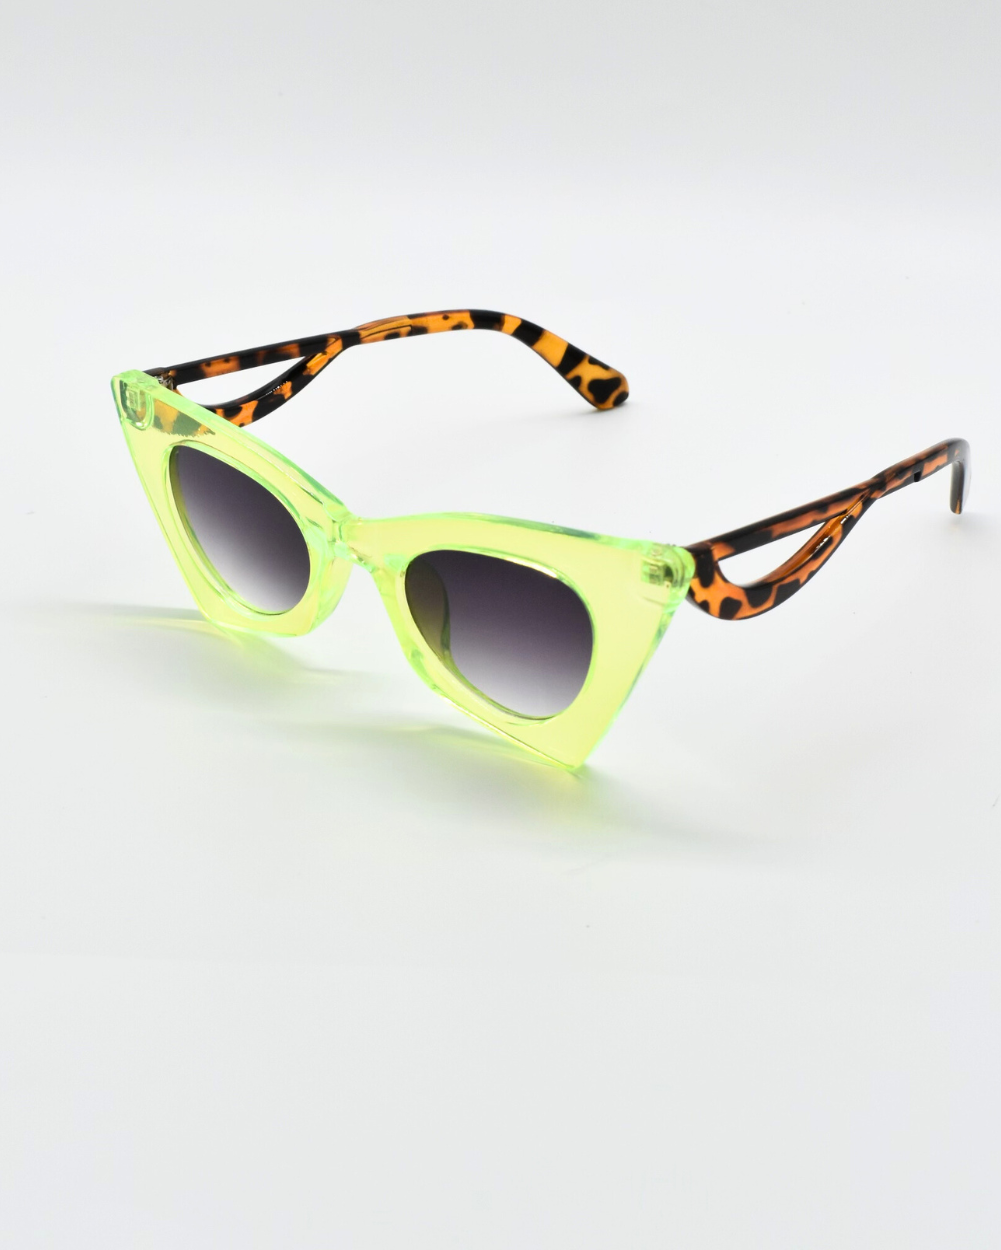 Neon Jelly Cat Eye Sunnies- Lime Green - Lunautics Sunglasses